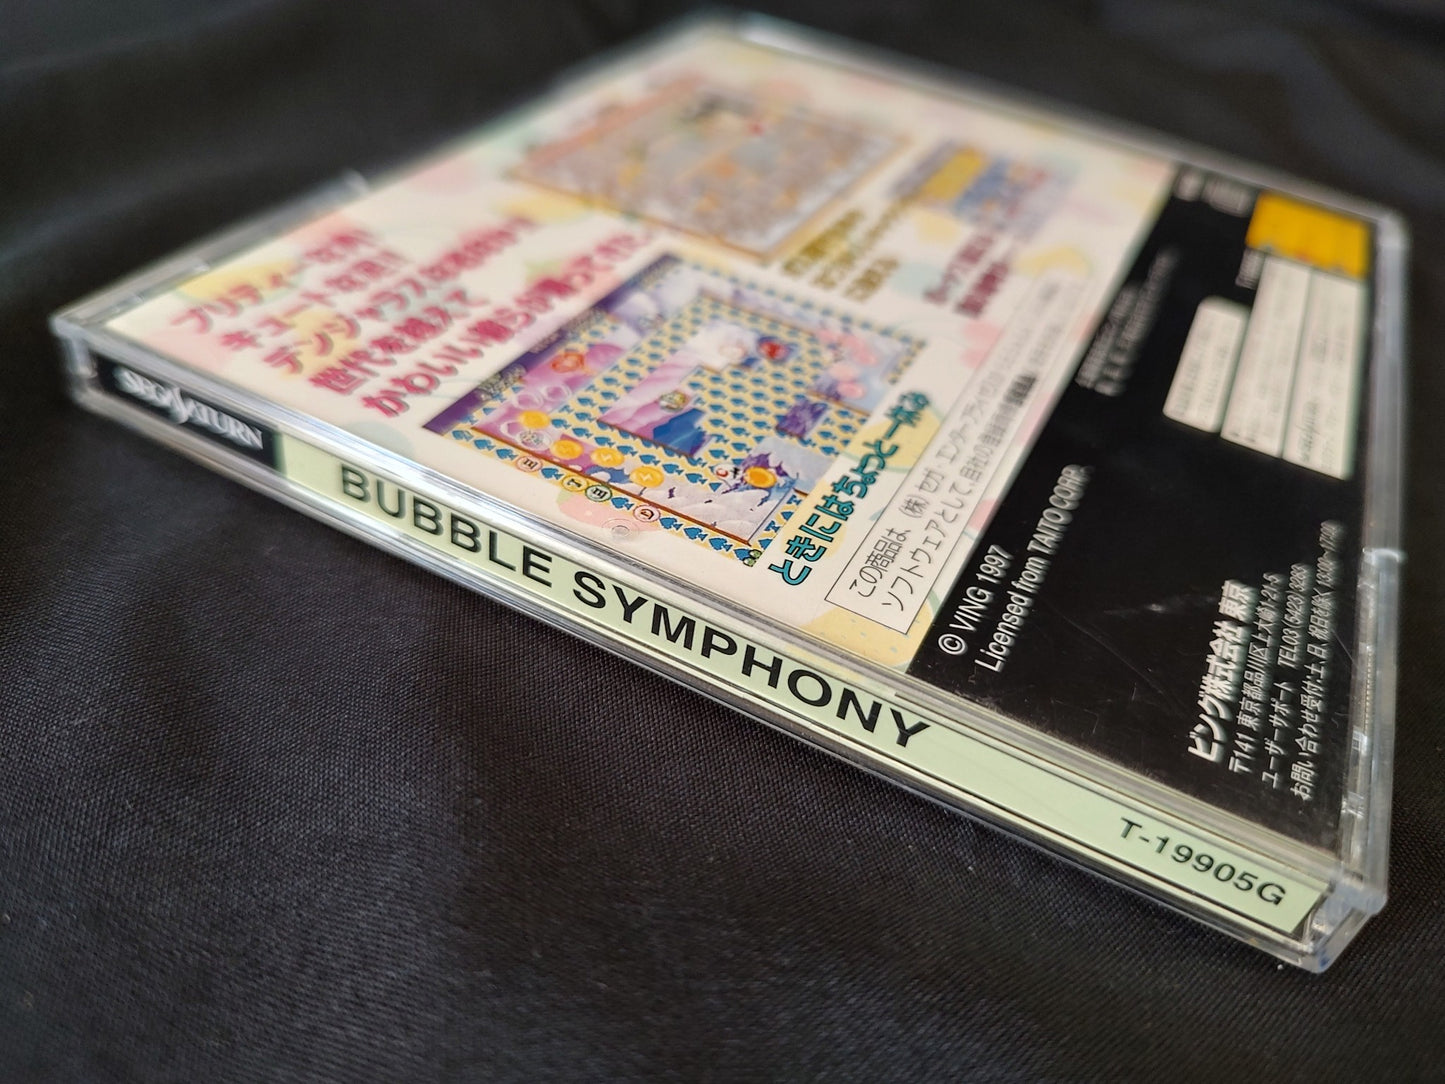 Bubble Symphony SEGA Saturn,Game Disk,Manual,Spine card,Boxed set tested-g0212-